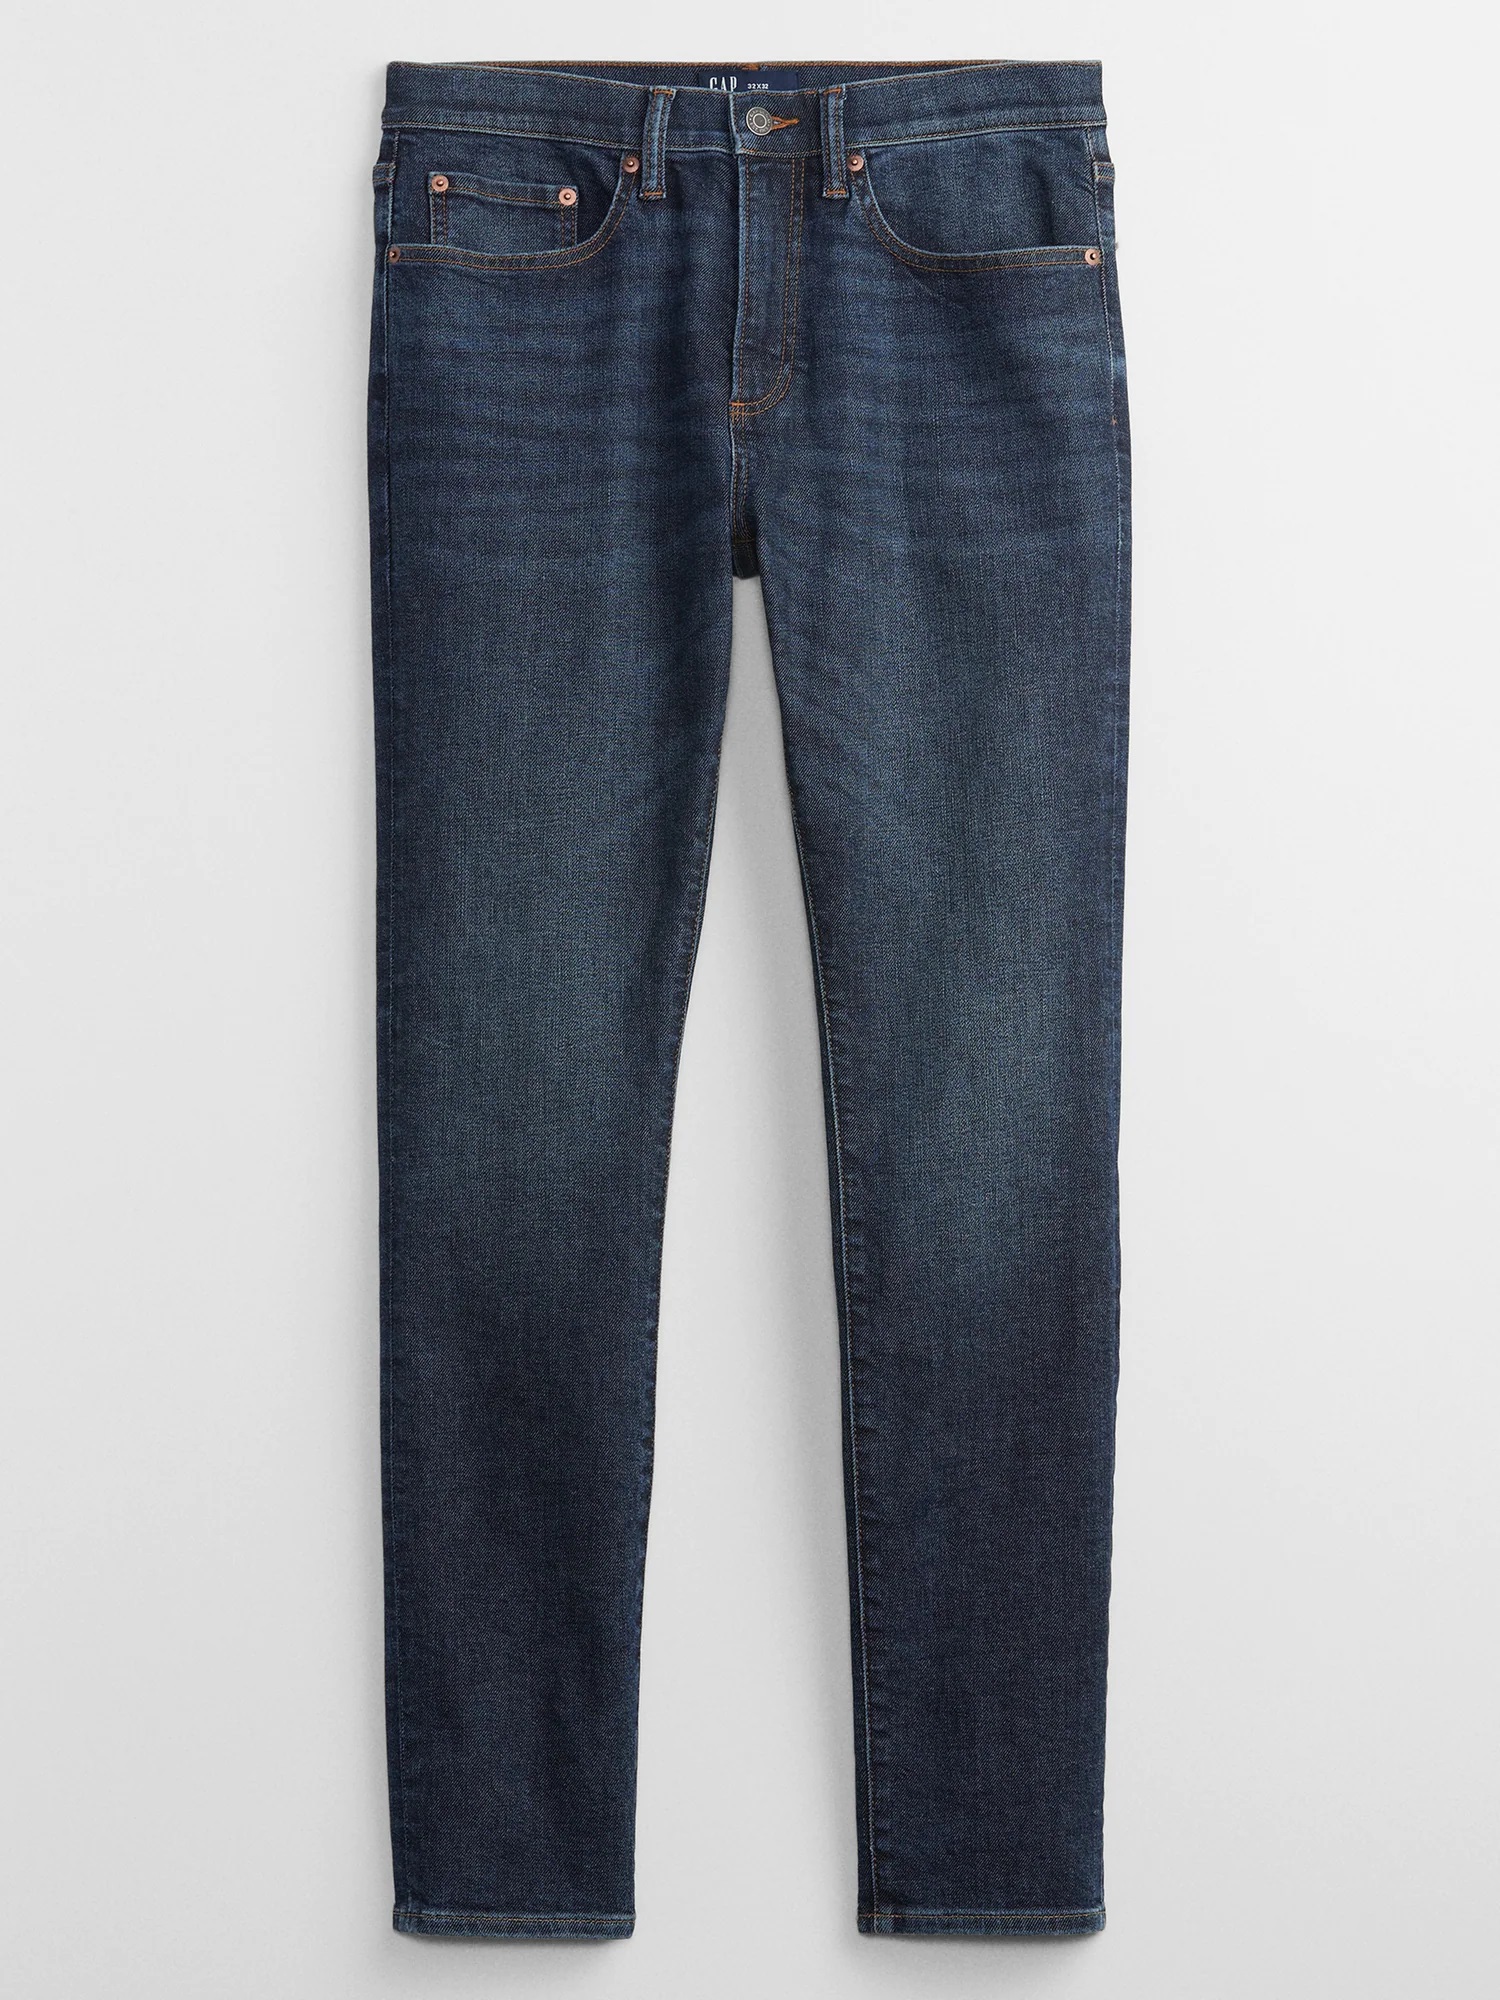 GAP Jeans Skinny Soft High Stretch - Men